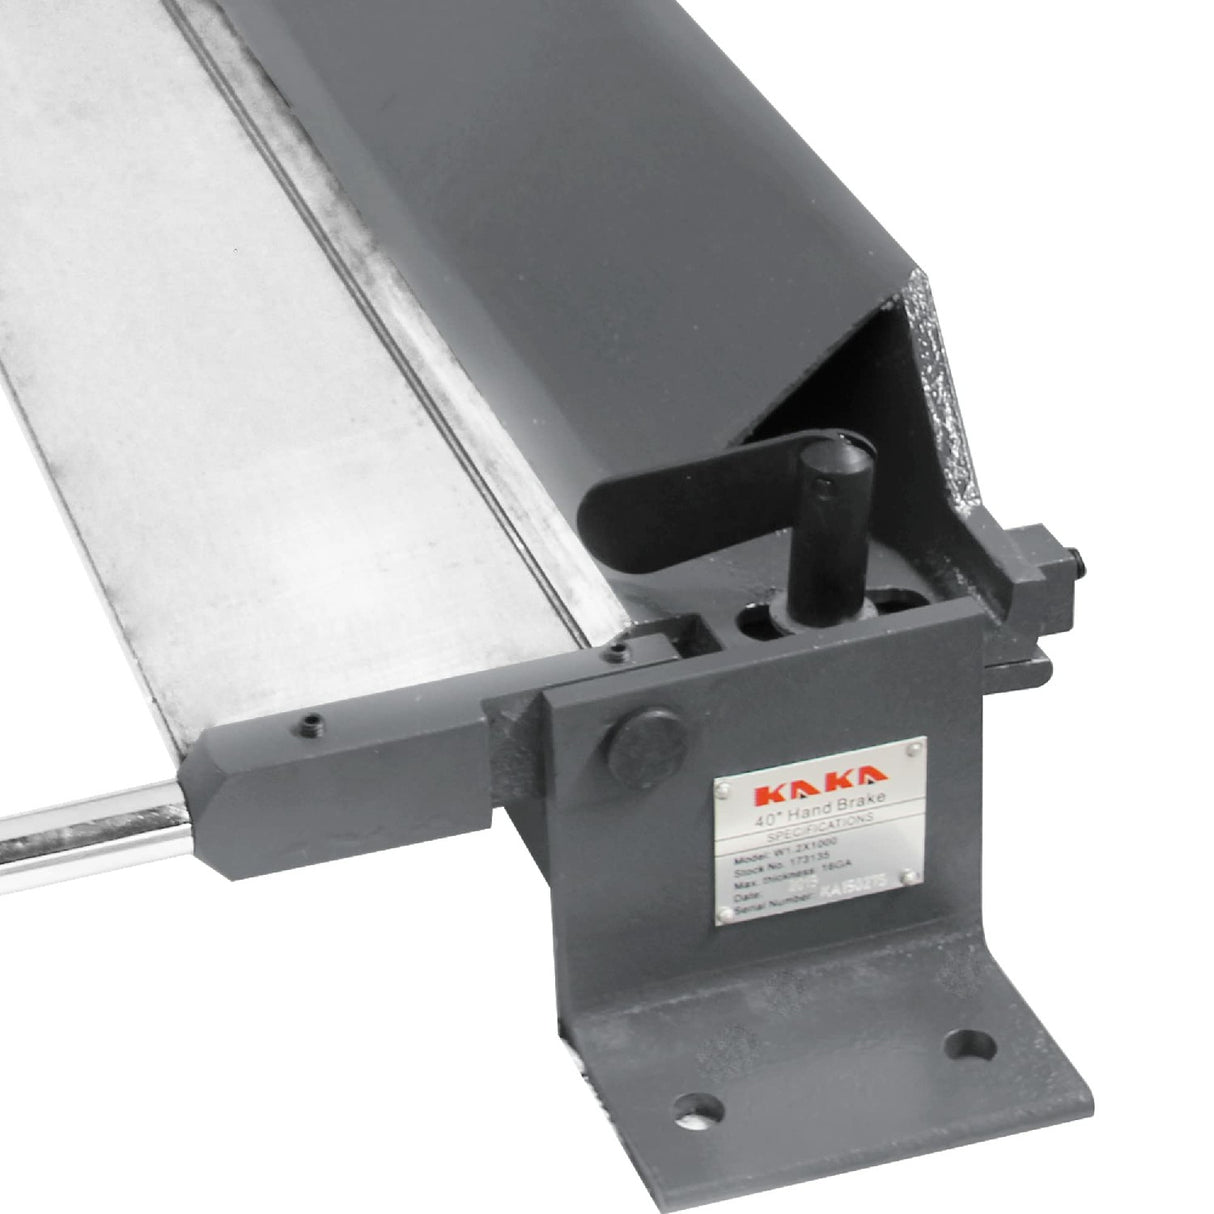 KANG Industrial W-4018 Sheet Metal Bending Brake, 1000mm Length Portable Metal Bender  Steel Bender